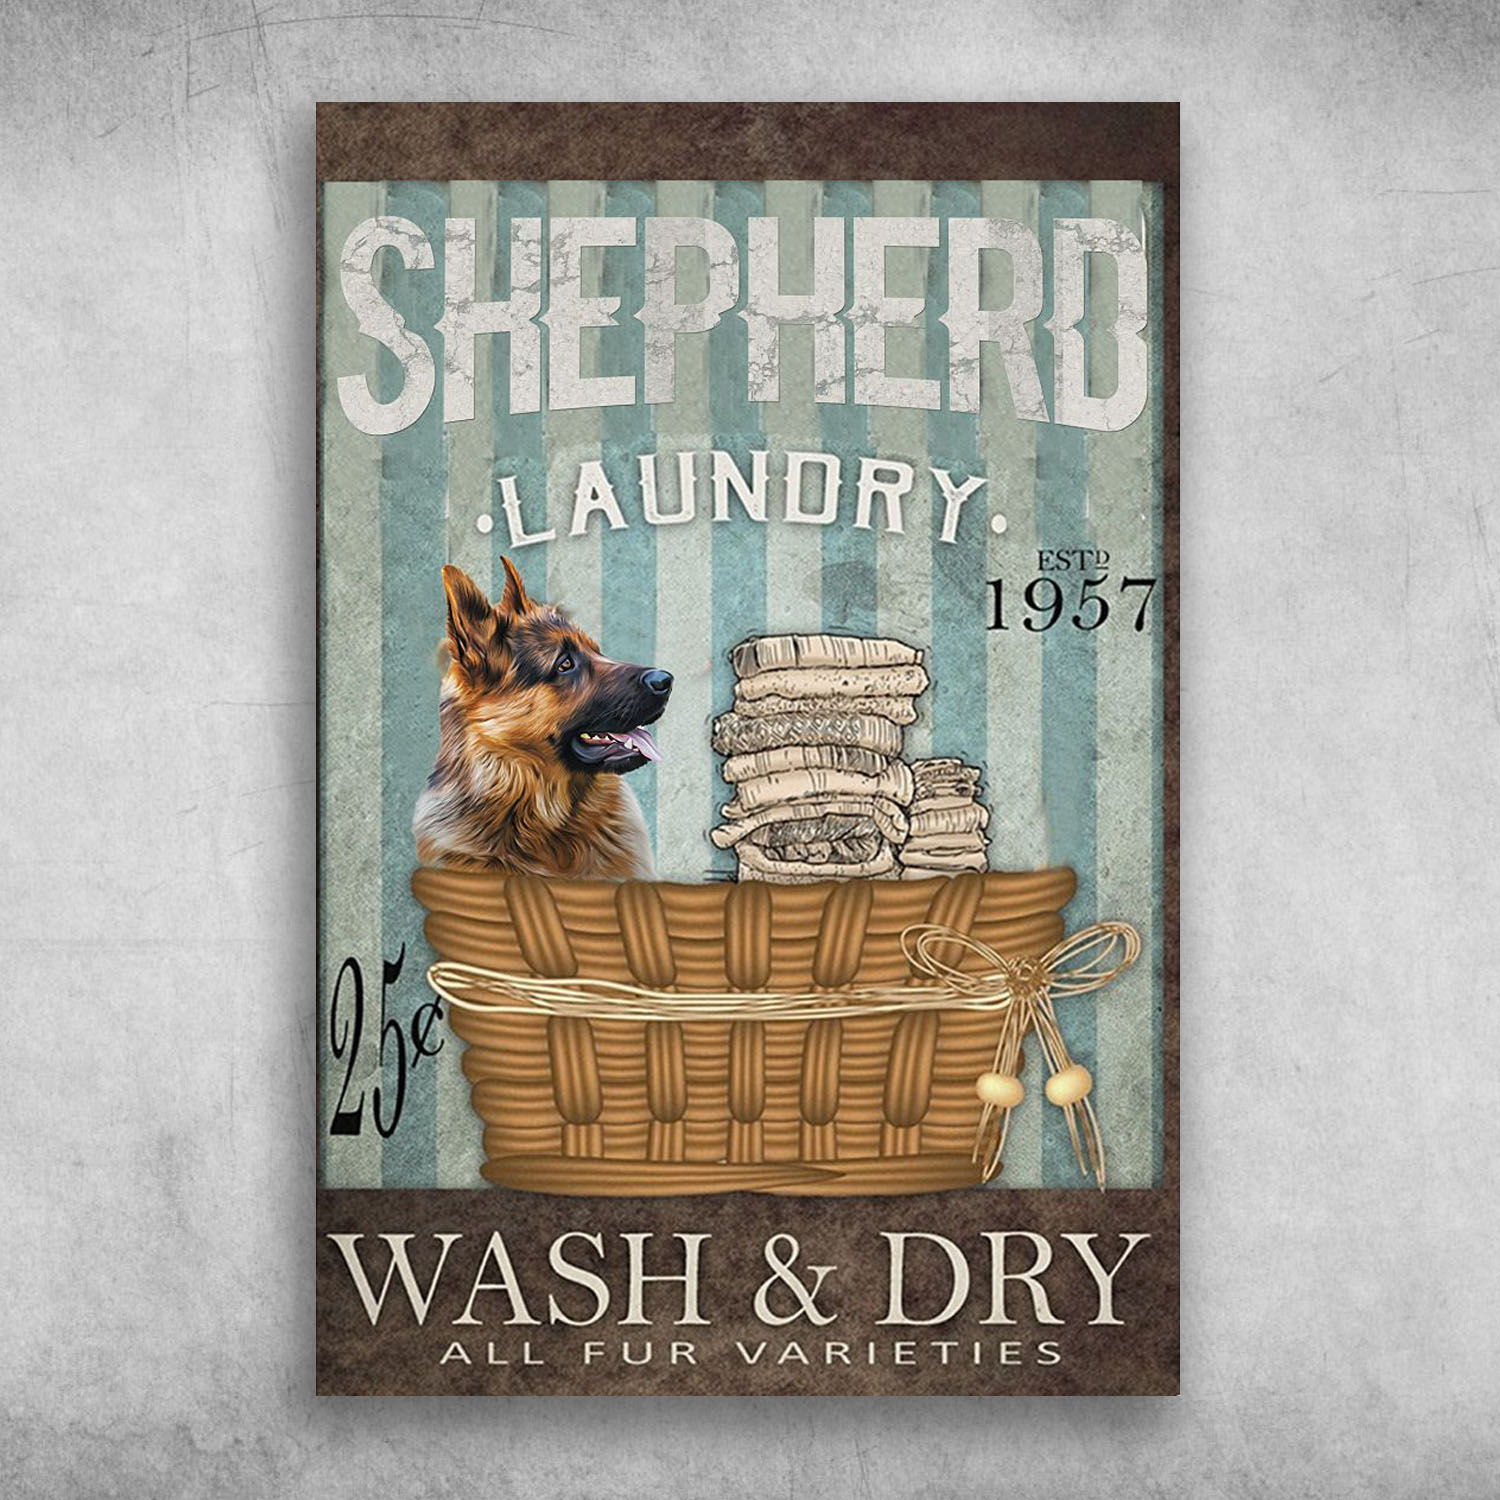 Shepherd Laundry Est 1957 Wash And Dry All Fur Varieties